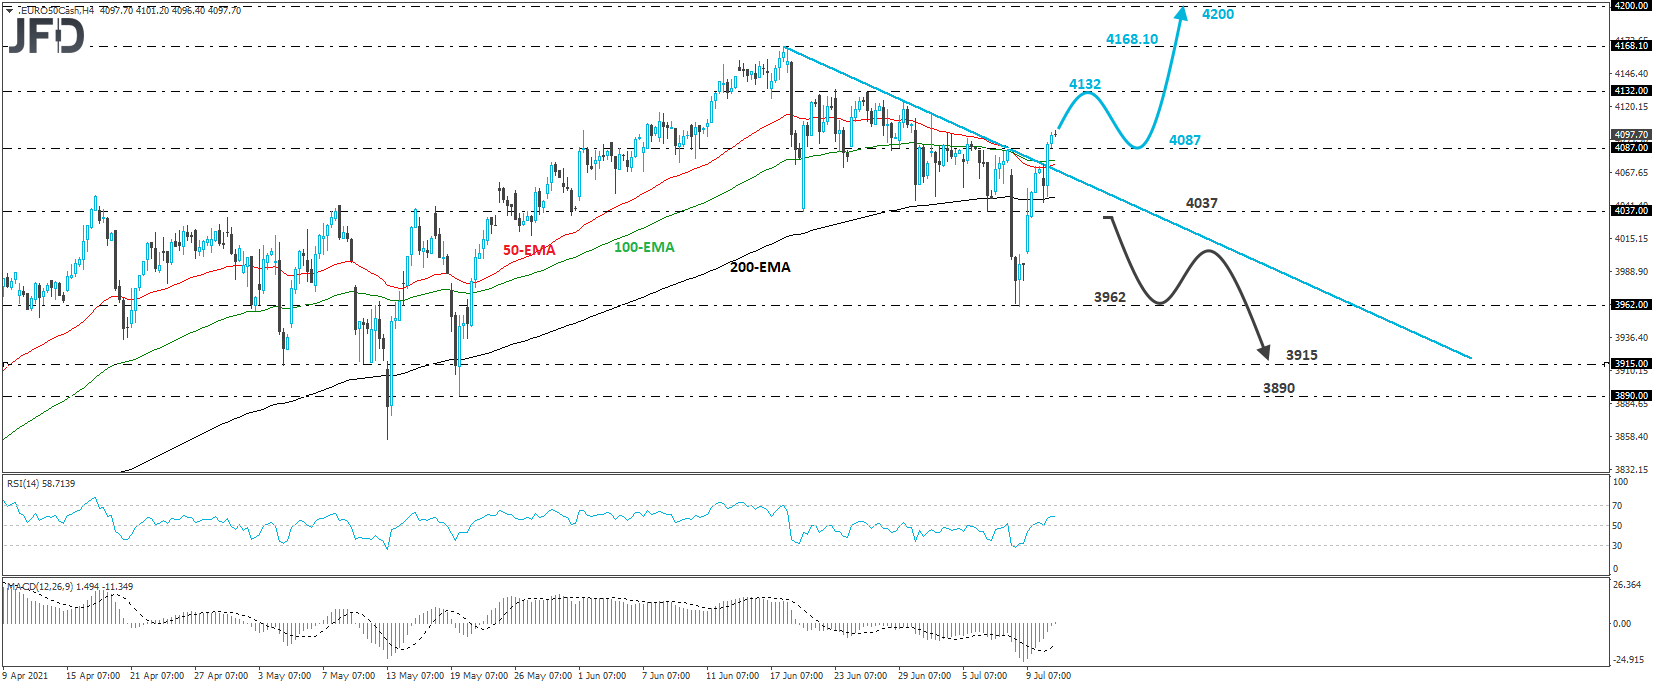 Euro Stoxx 50 cash index 4-horu chart technical analysis